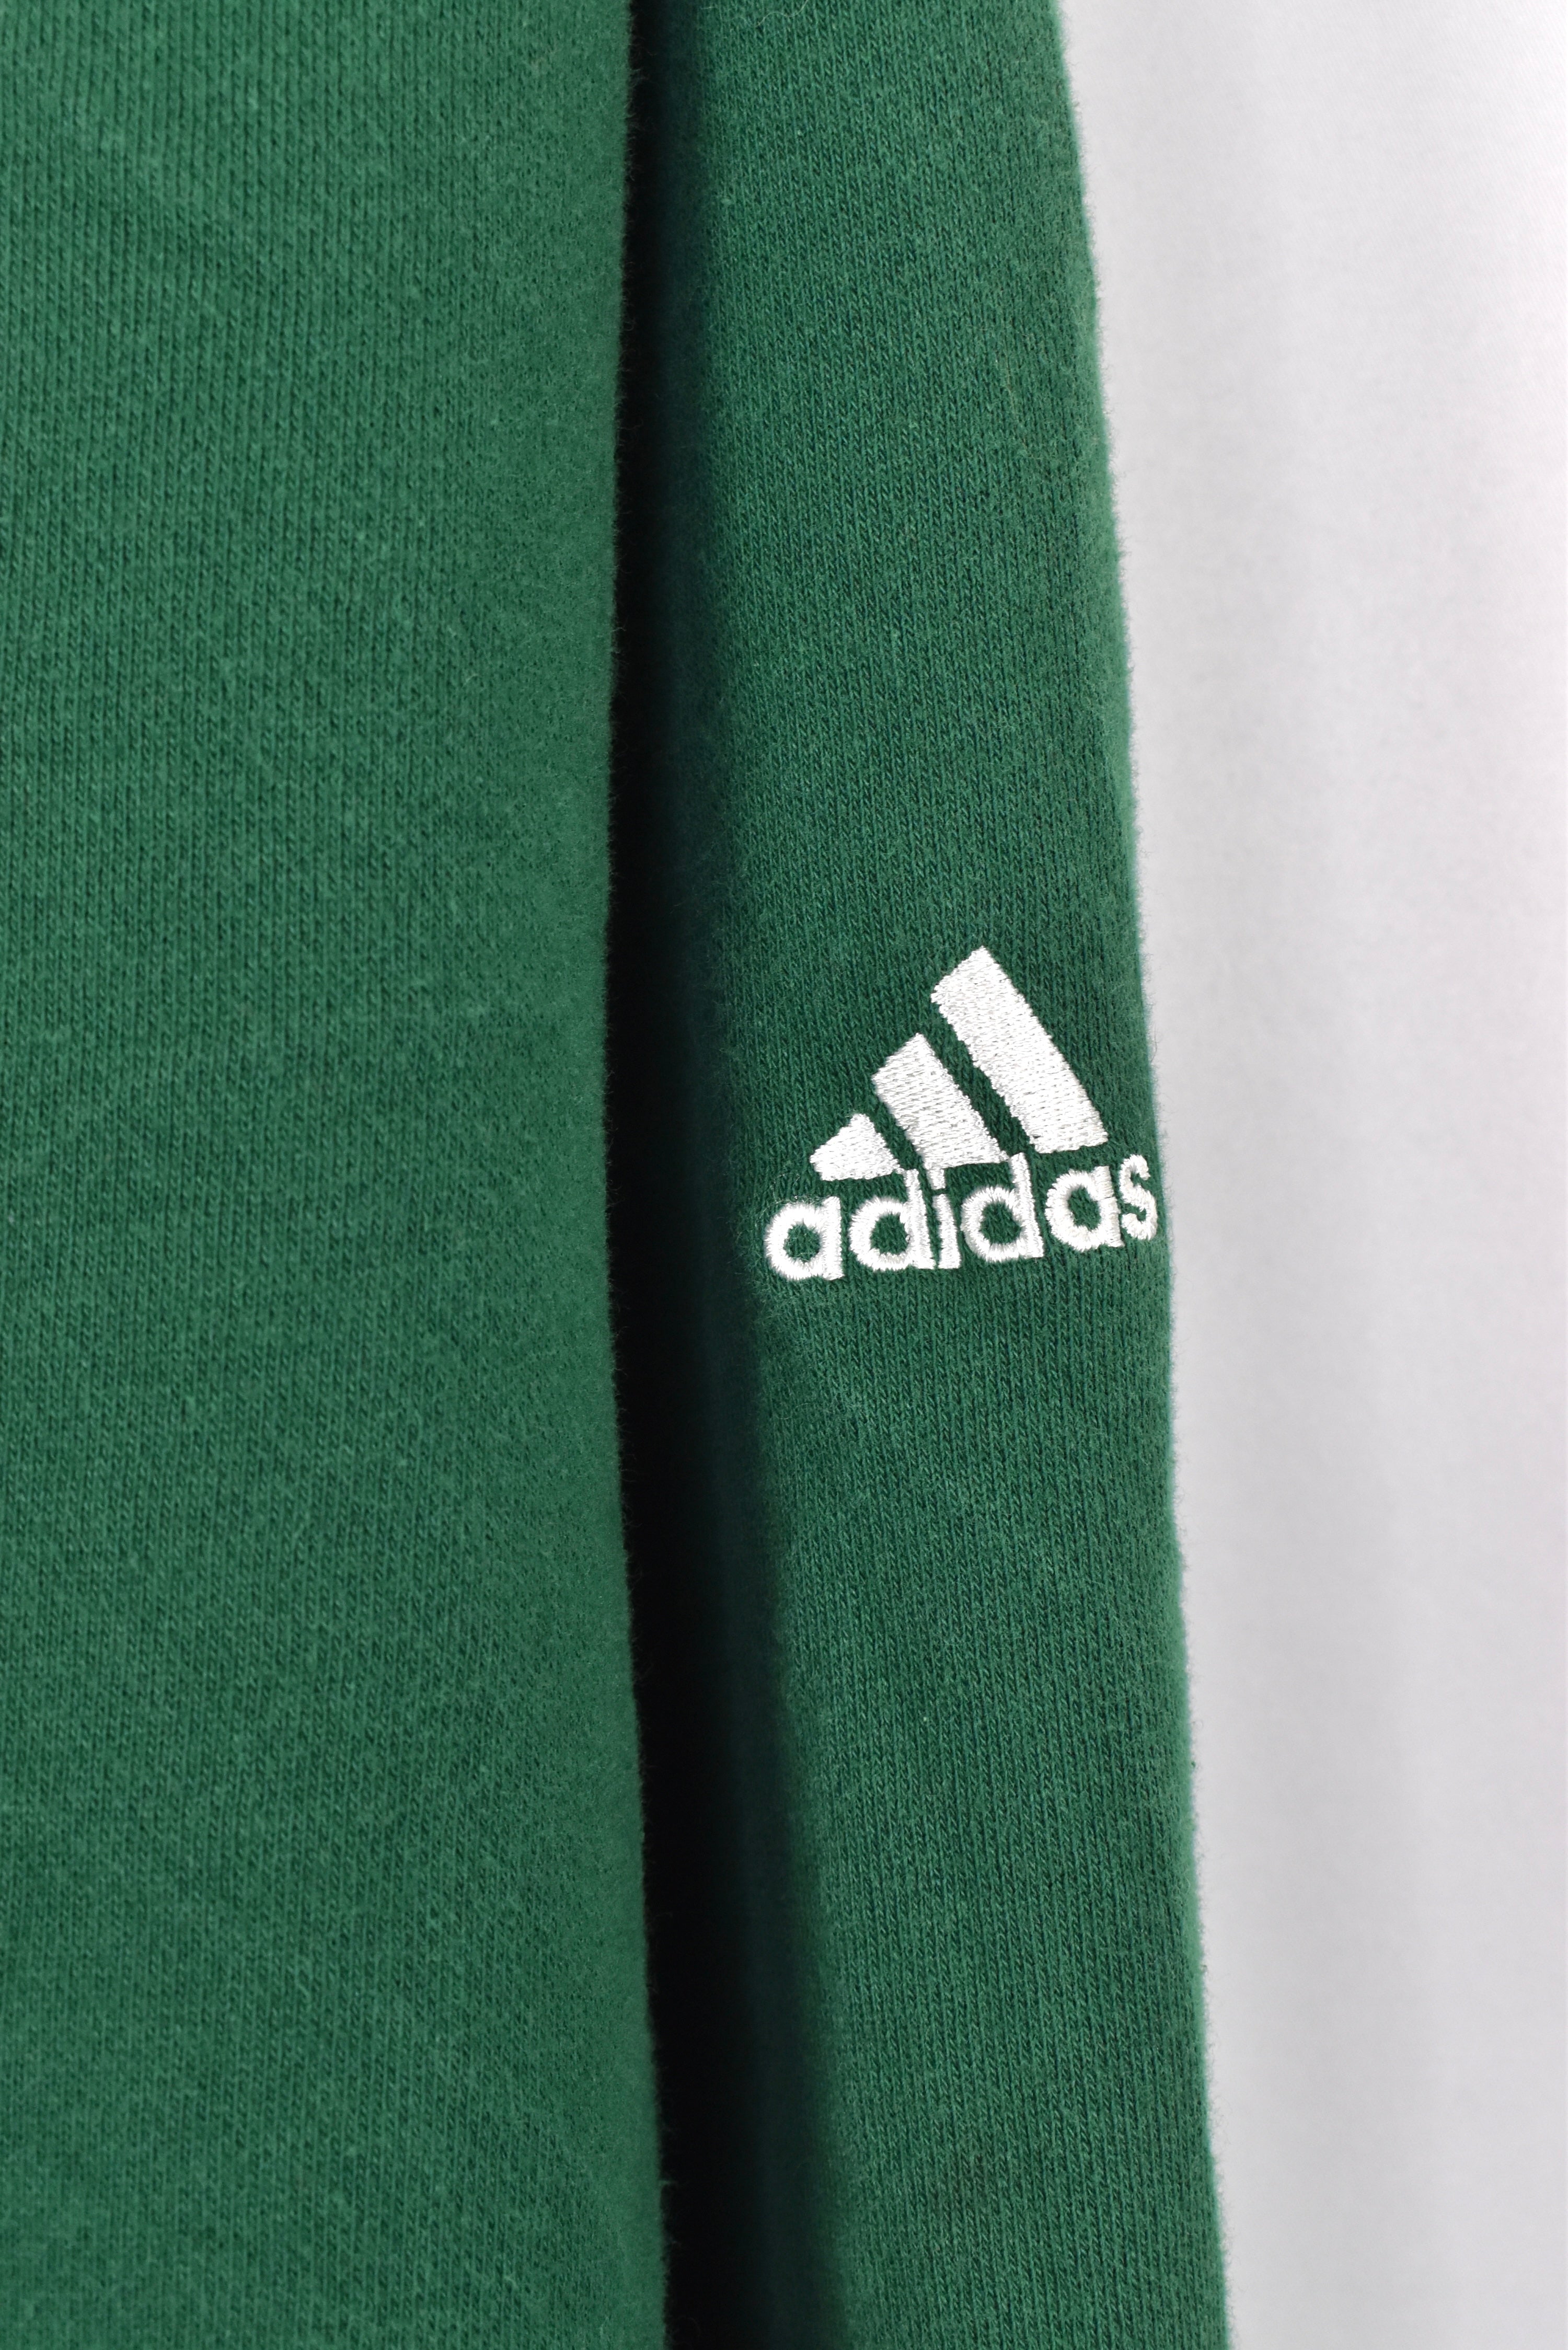 Vintage Adidas hoodie, green embroidered sweatshirt - AU XXL ADIDAS